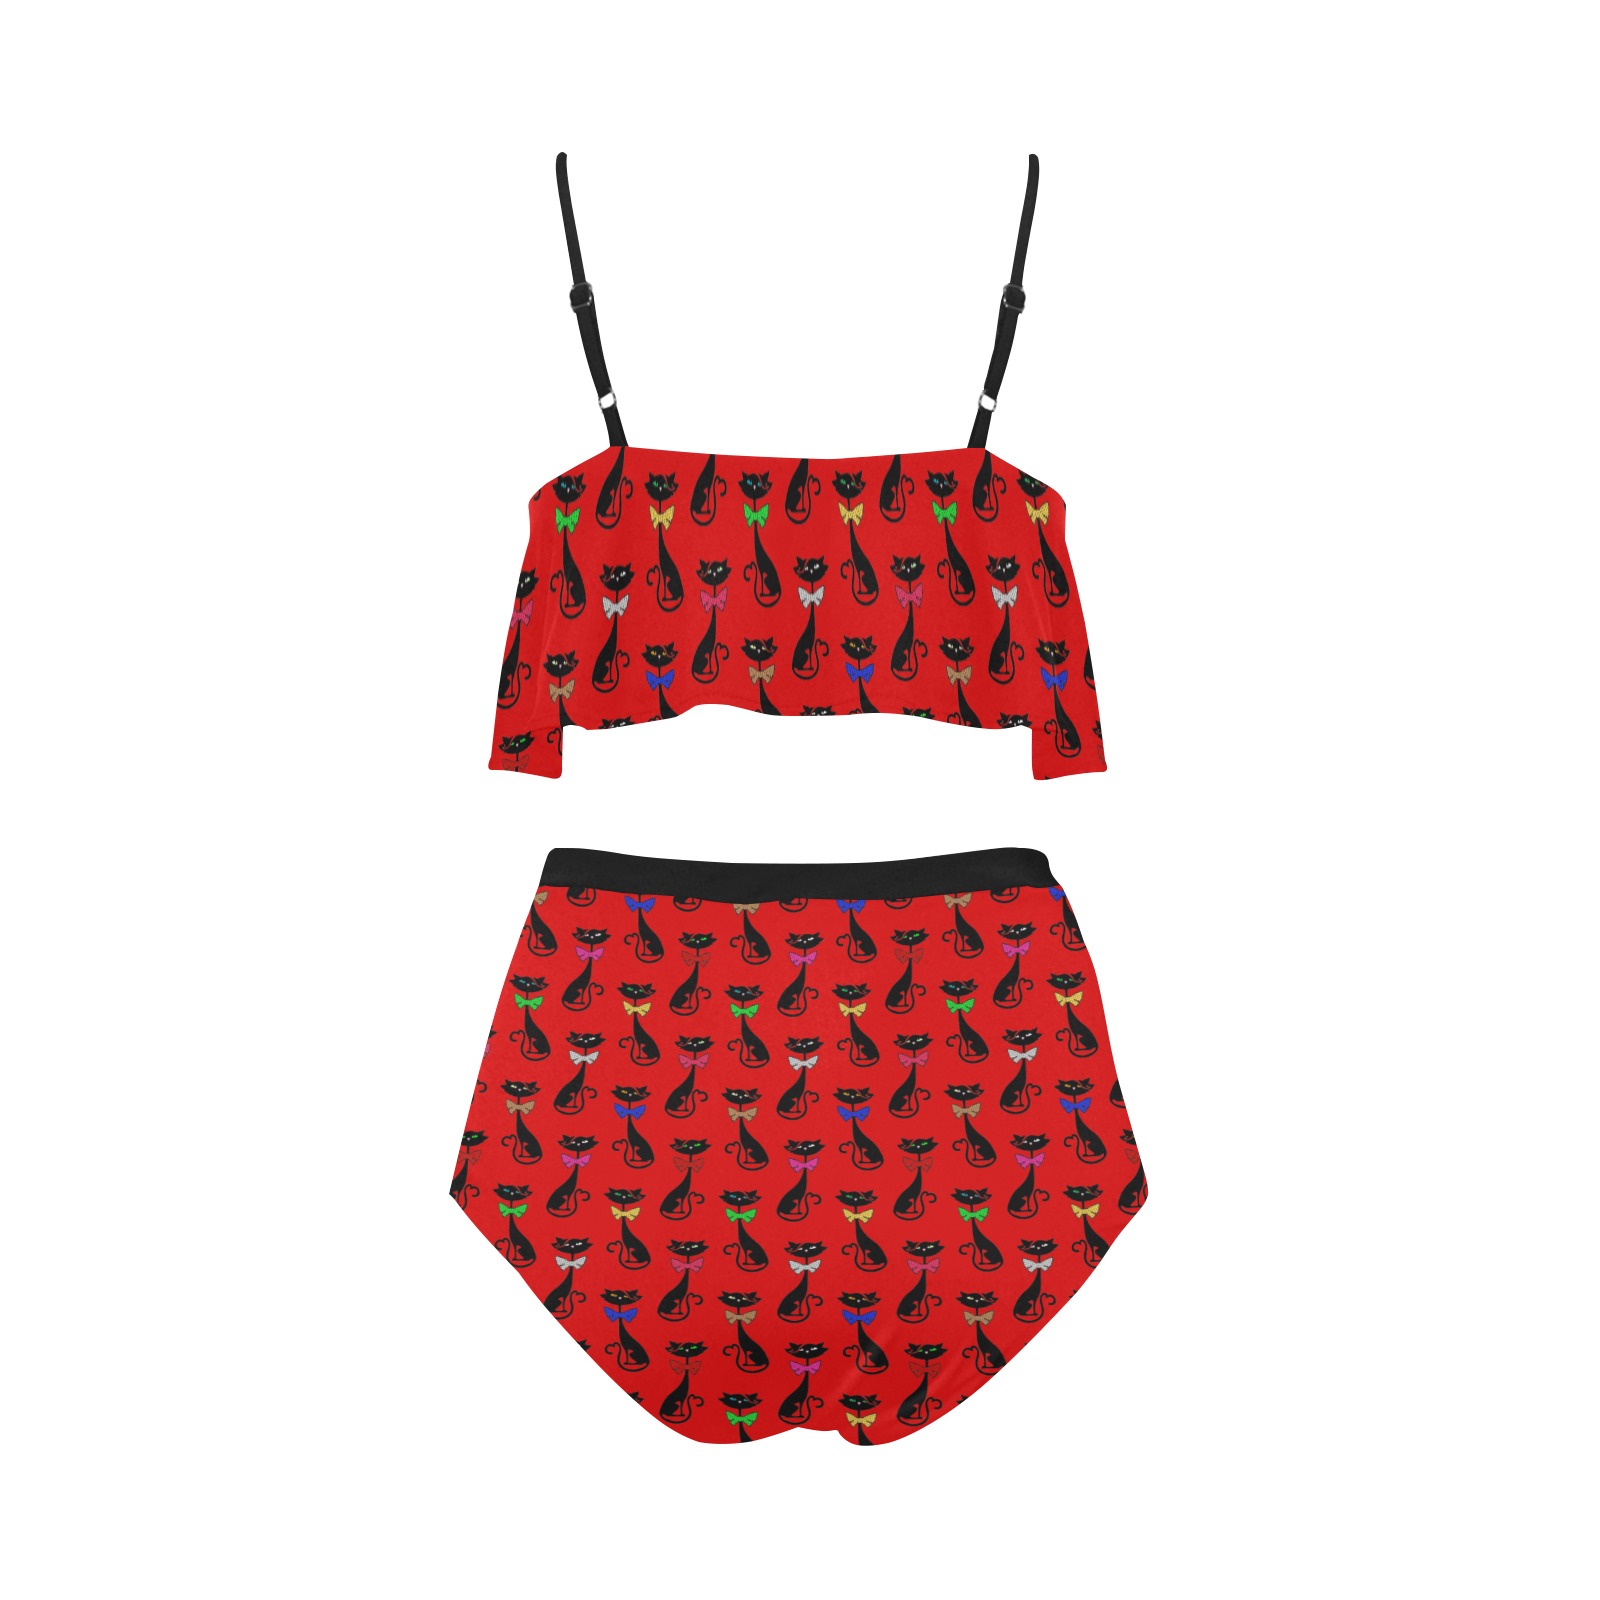 Black Cats Wearing Bow Ties - Red High Waisted Ruffle Bikini Set (Model S13)